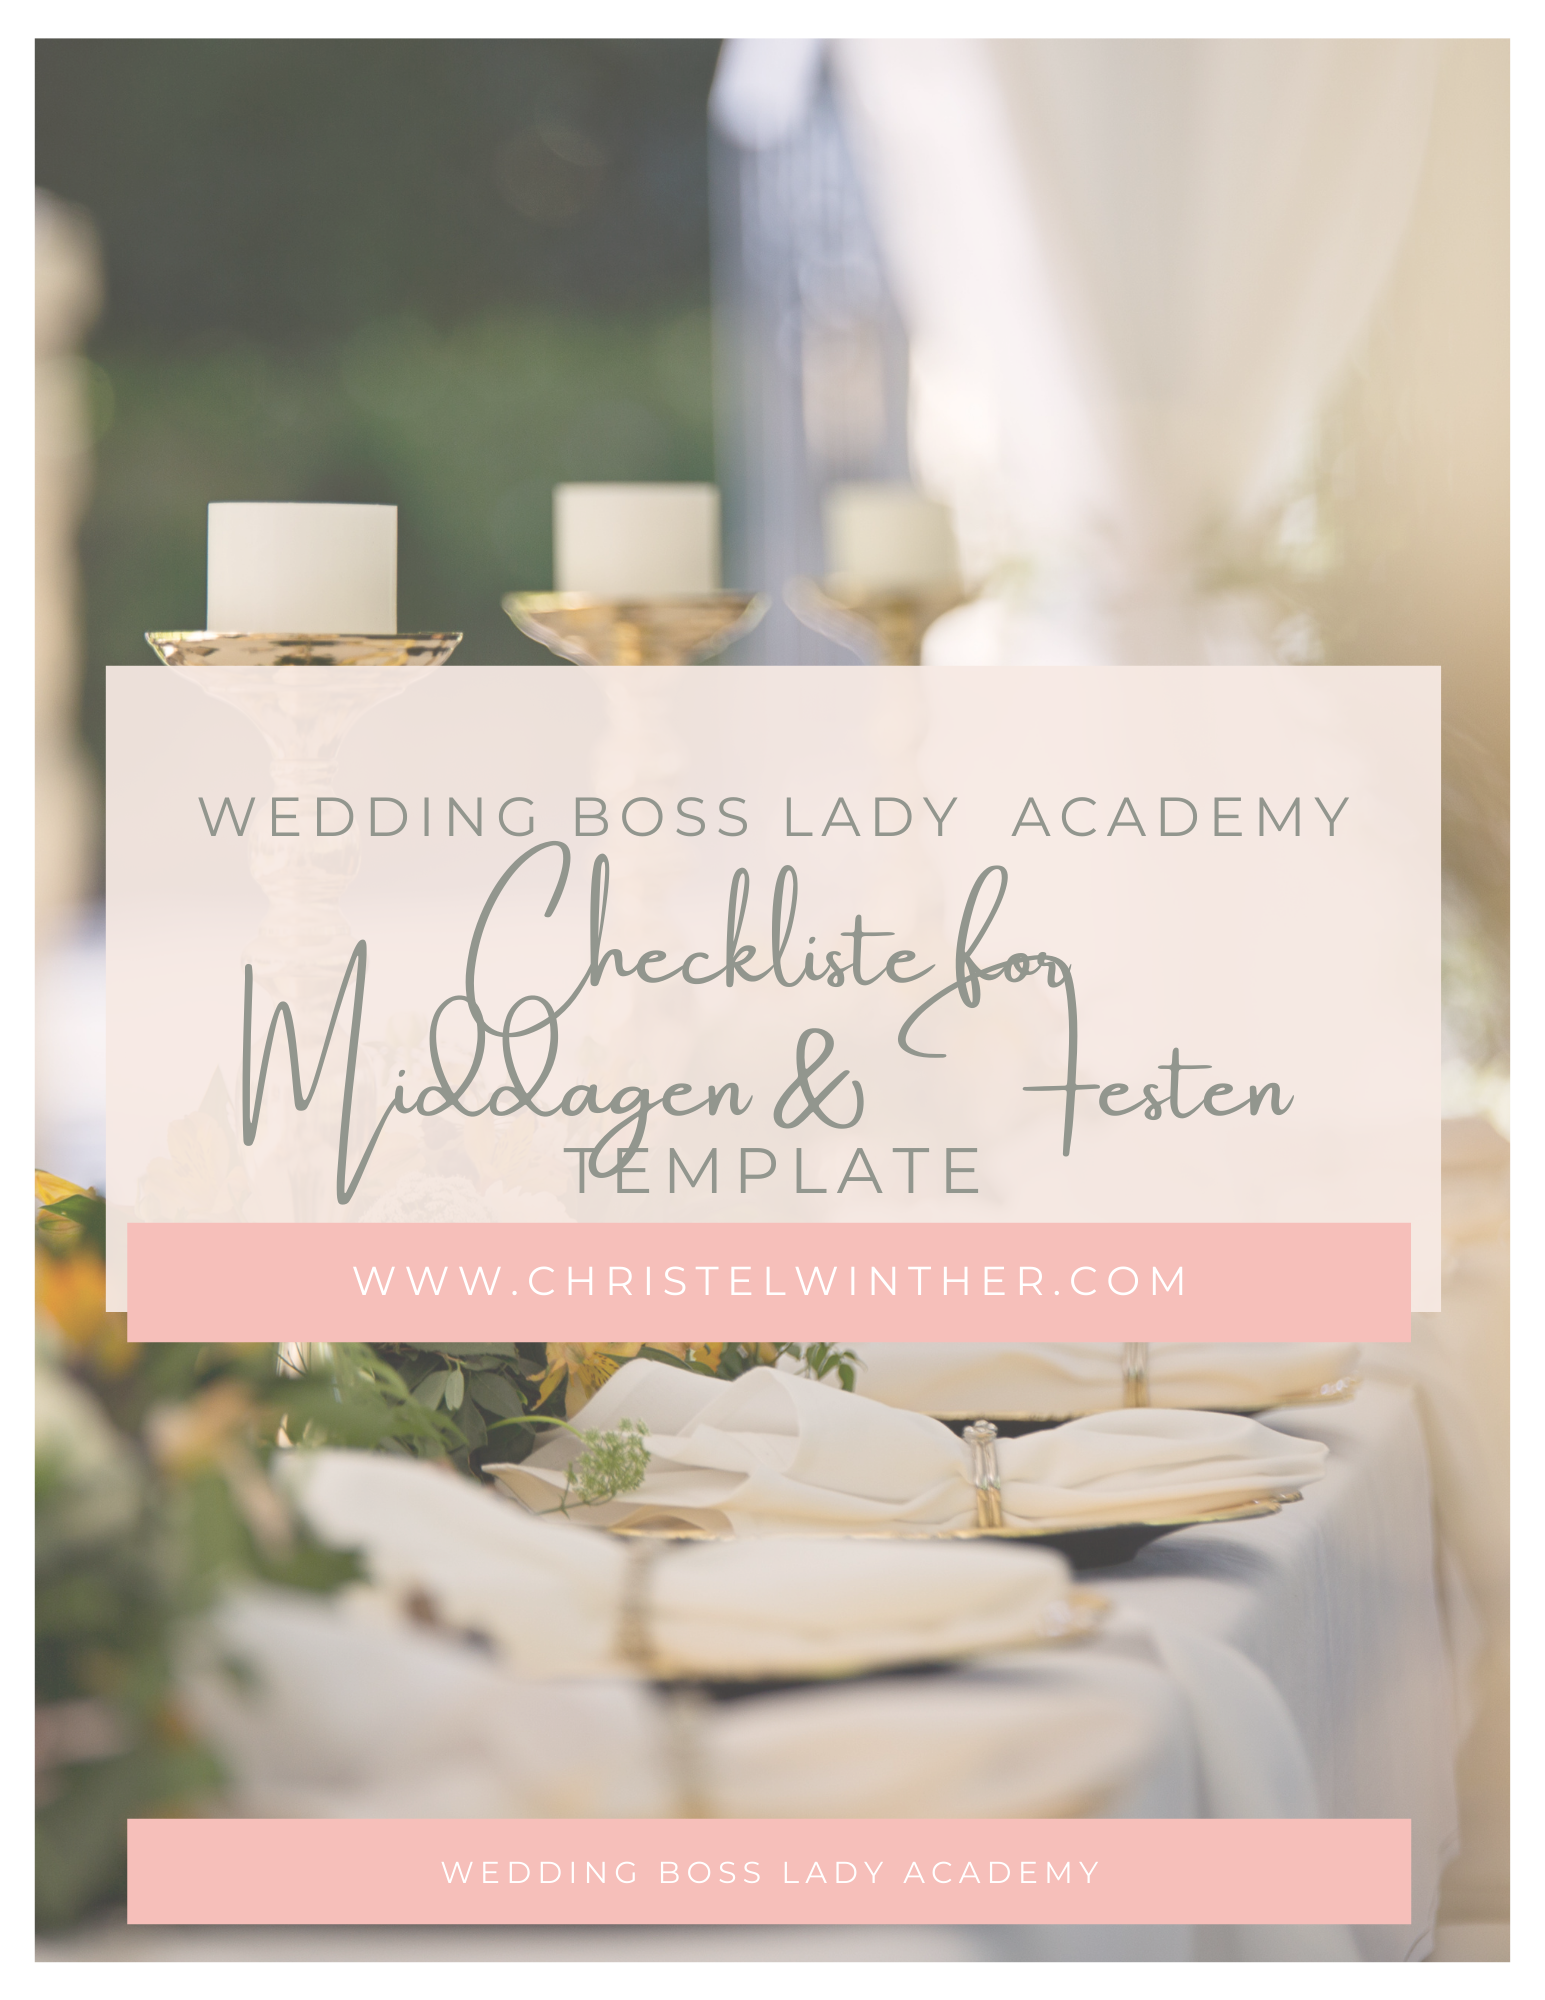 Checkliste til & Festen – Wedding Boss Lady Academy